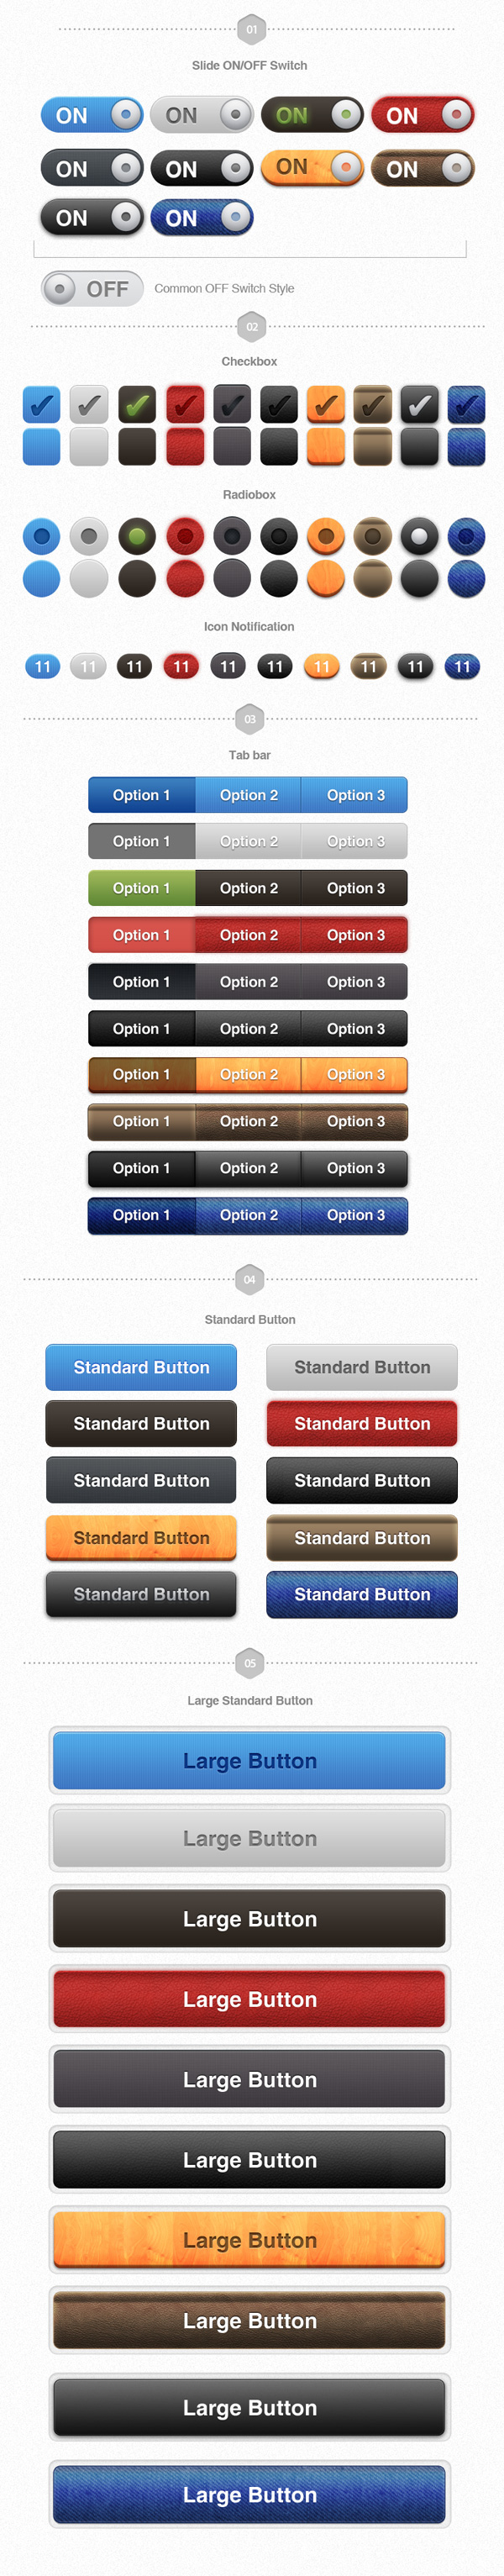 ui kit ui design user interface GUI ios iphone iPad Retina Display apps navigation buttons color full Theme iphone ui modern